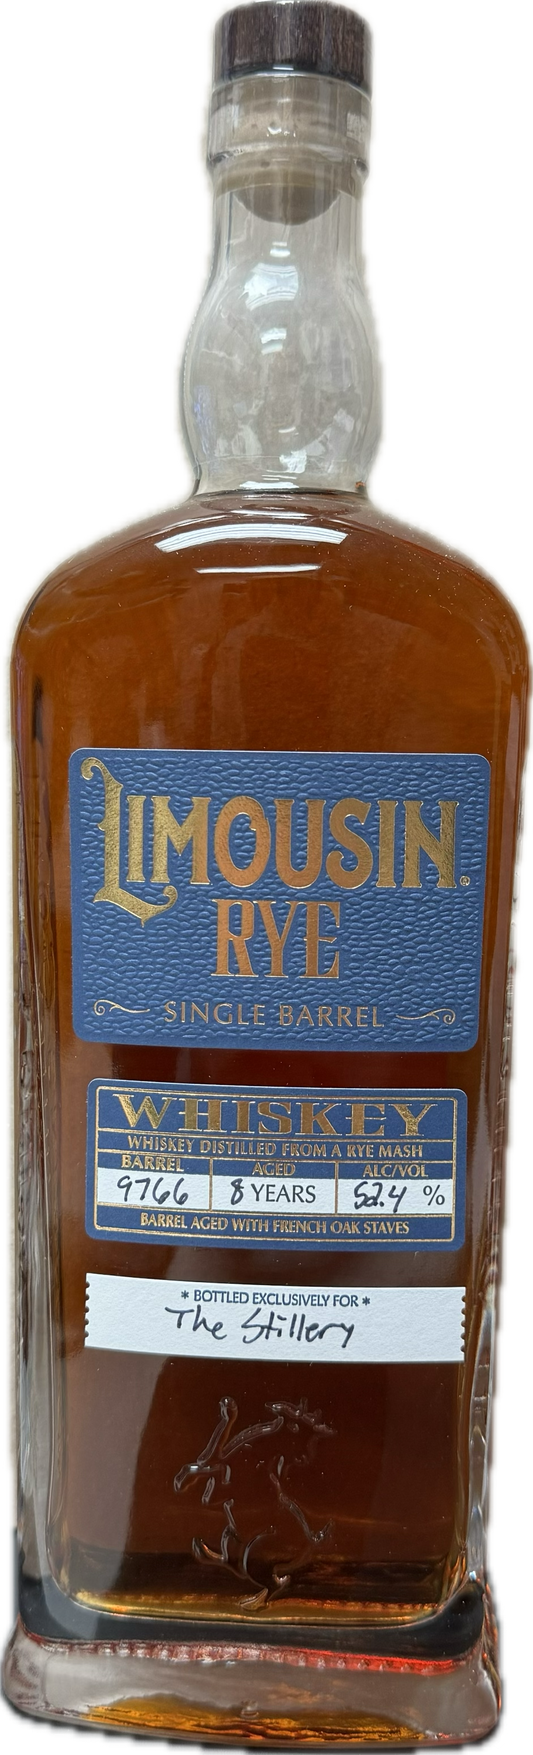 Limousin Rye Honey Barrel Release